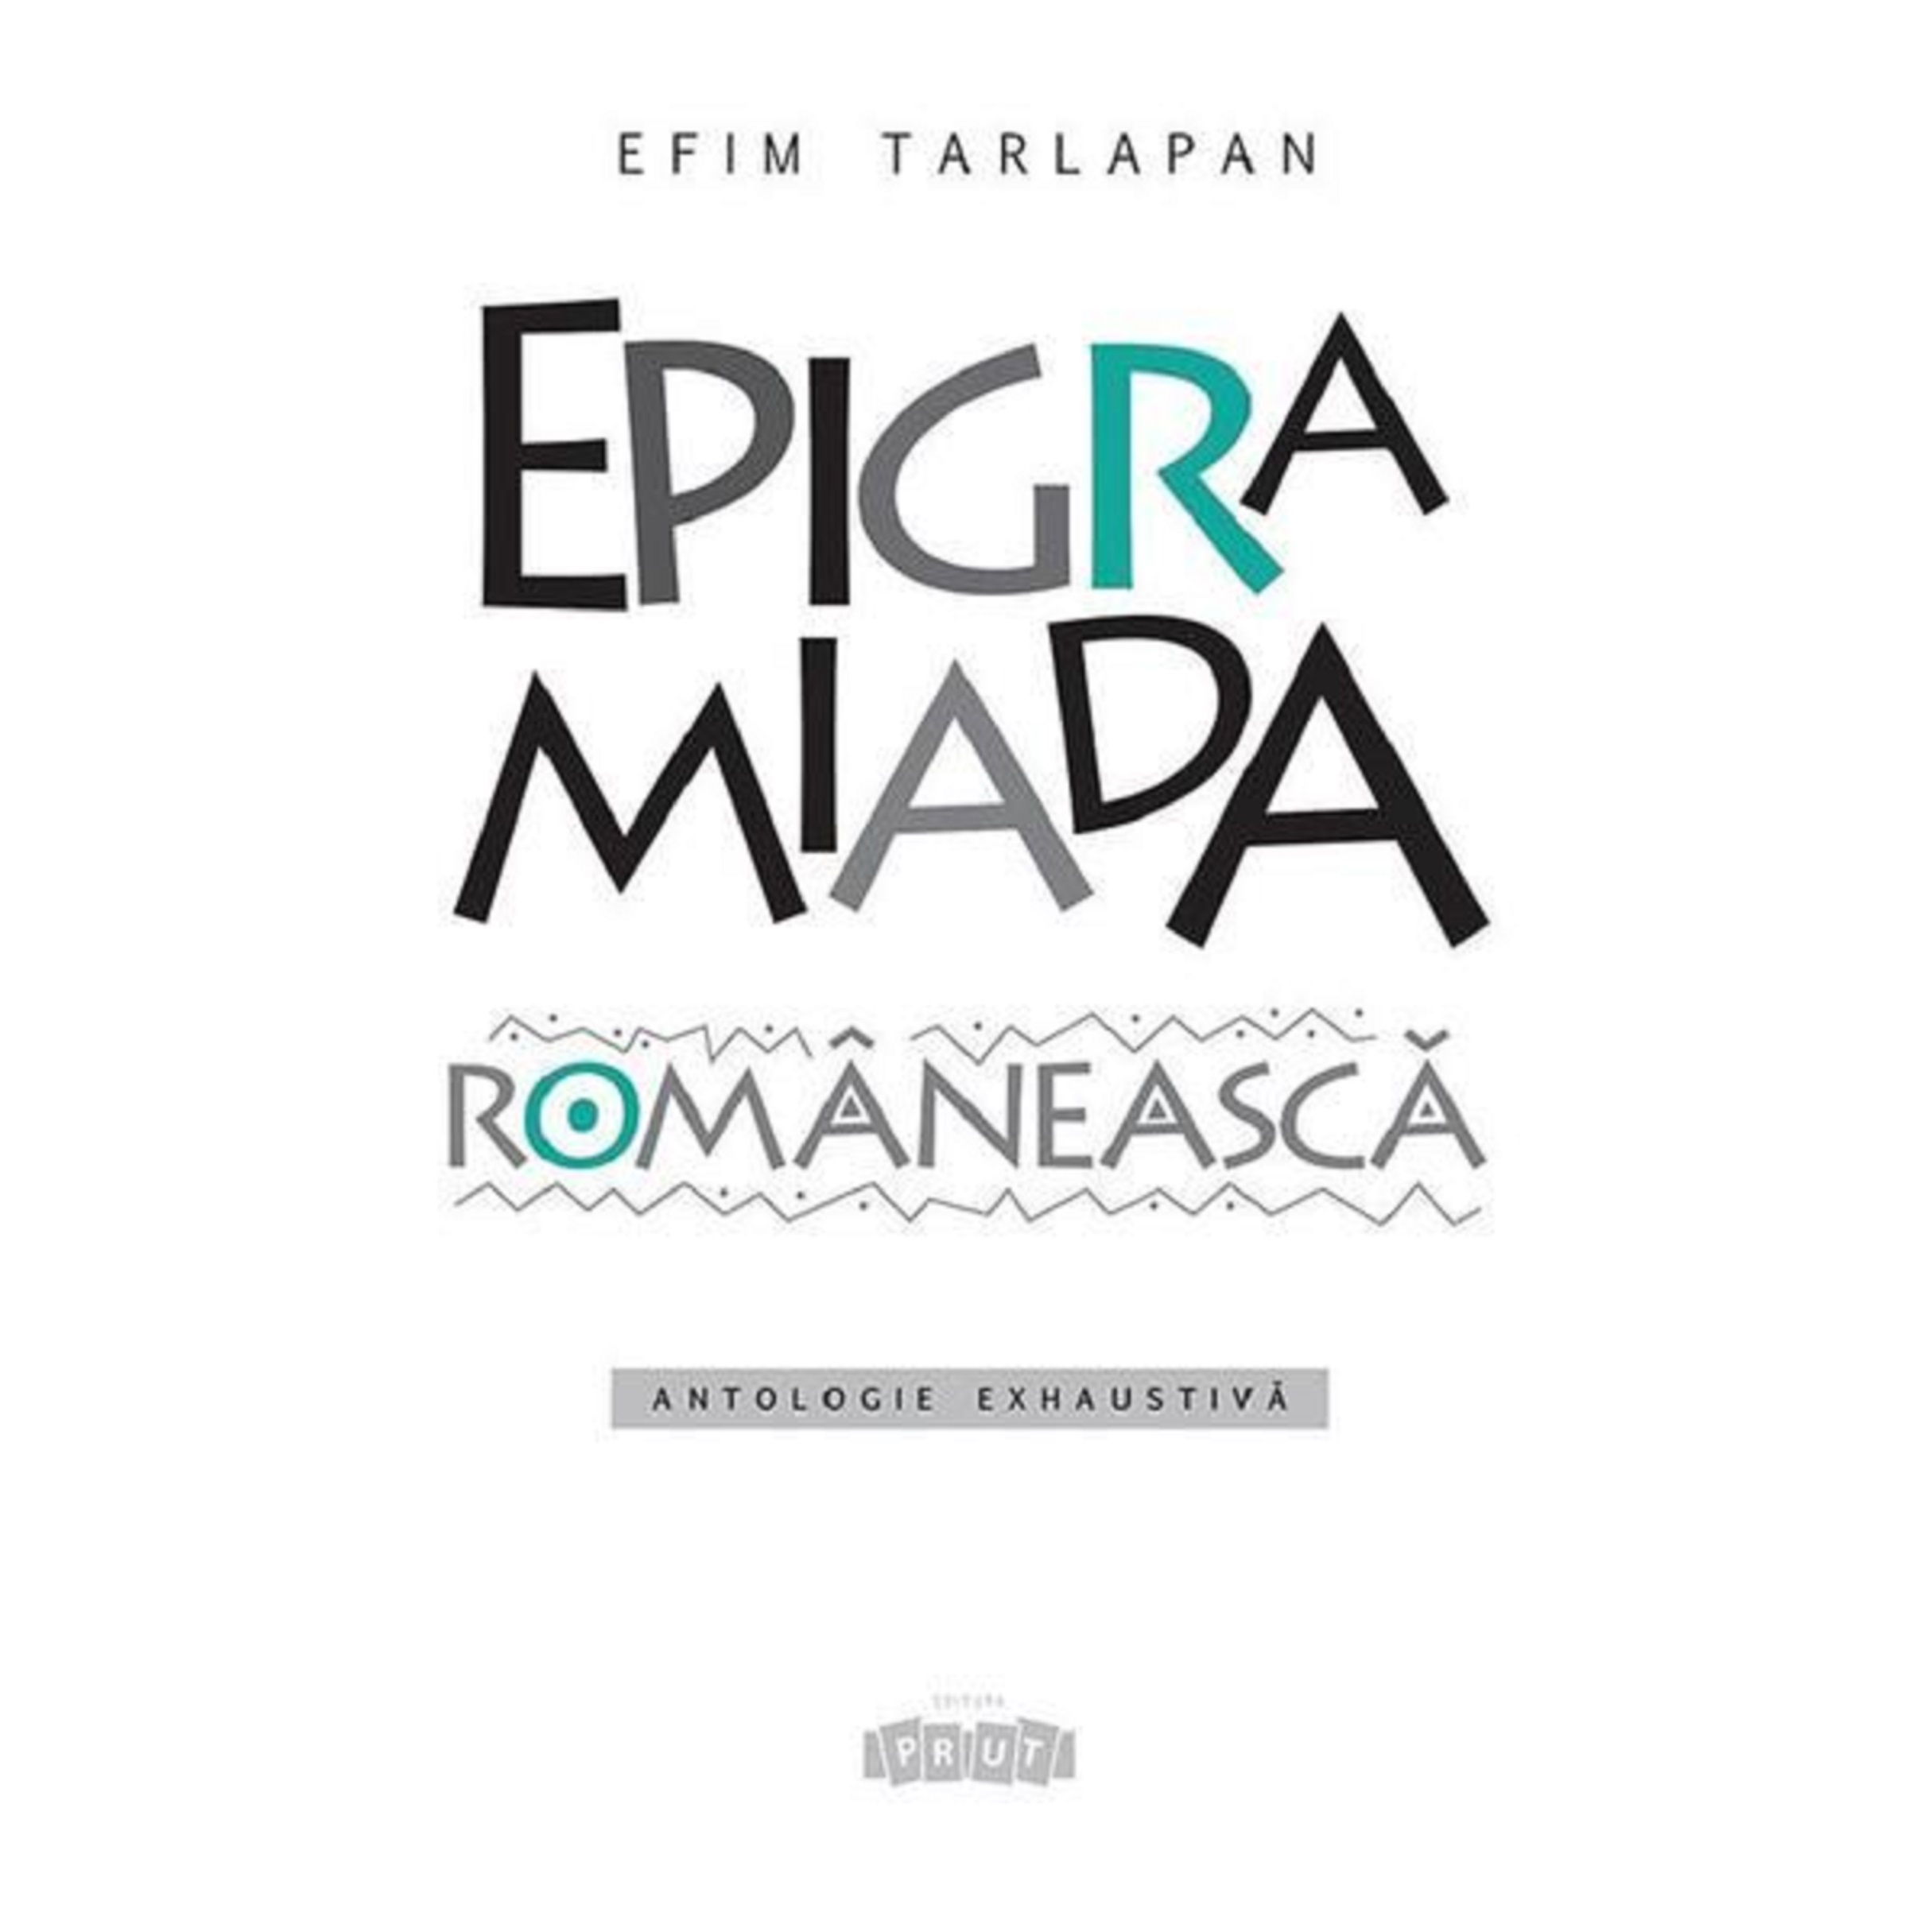 Epigramiada romaneasca | Efim Tarlapan